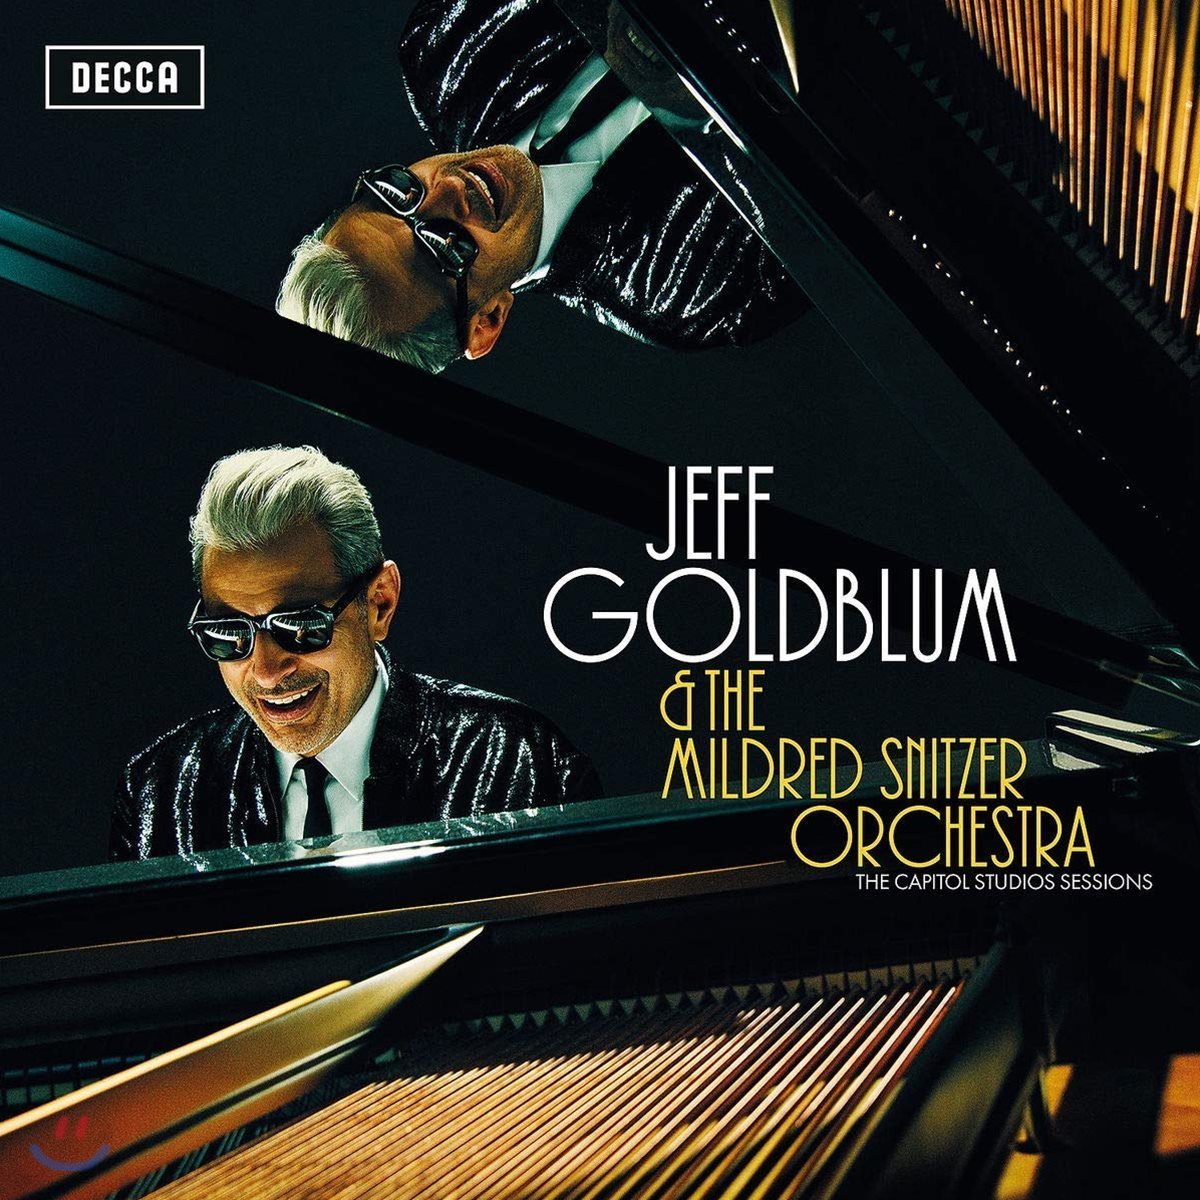 Jeff Goldblum &amp; The Mildred Snitzer Orchestra (제프 골드블룸 앤 마일드레드 스니처 오케스트라) - The Capitol Studios Sessions [2LP]